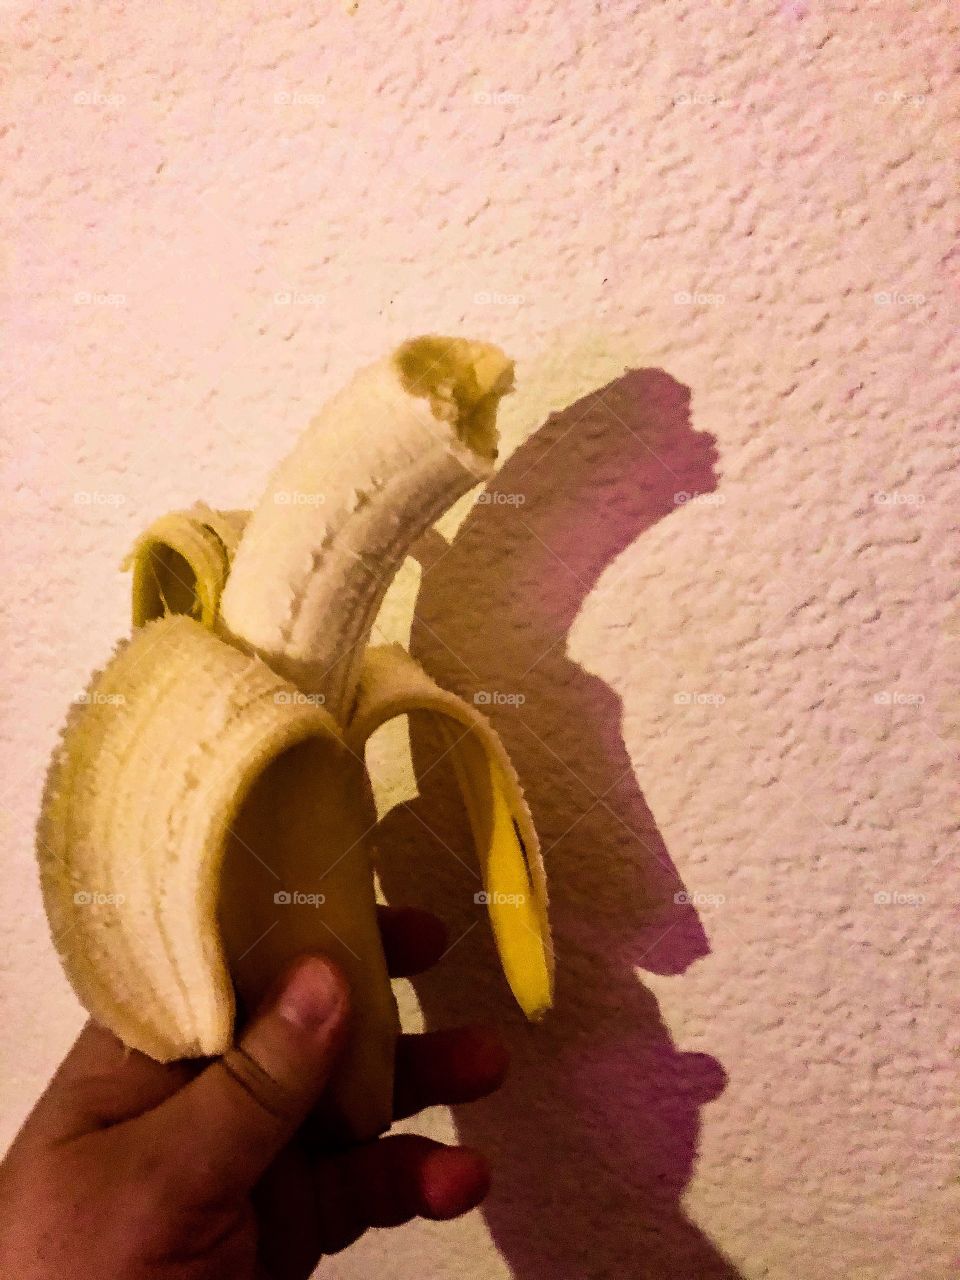 Banana and it’s shadow.